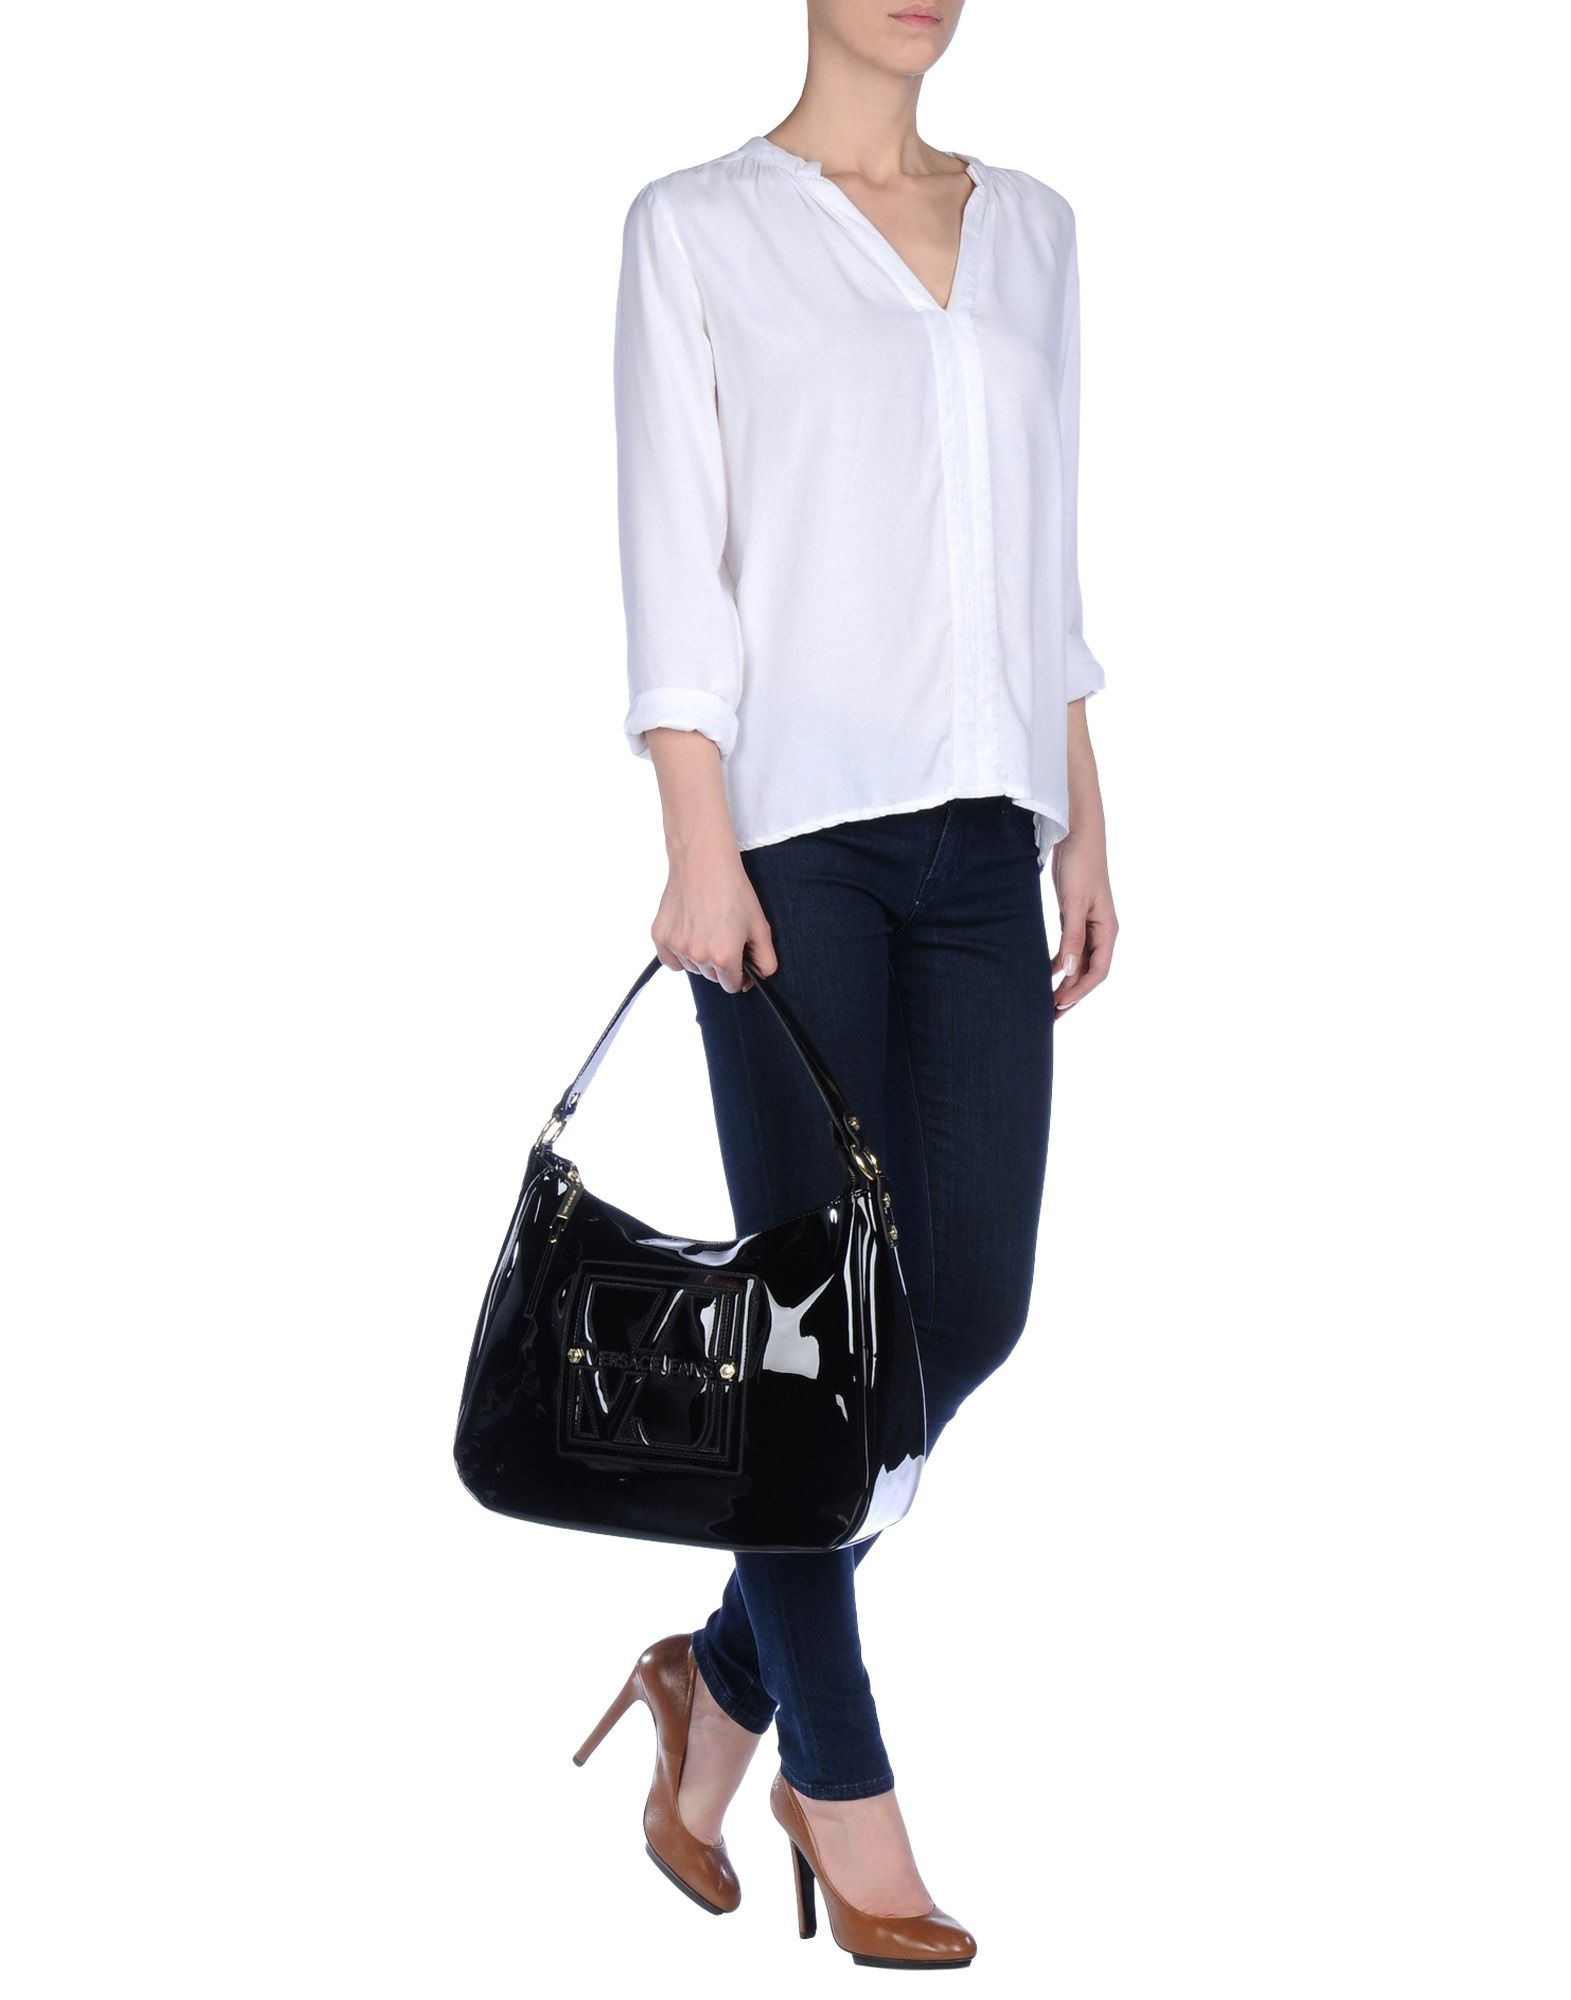 Lyst - Versace Jeans Handbag in Black